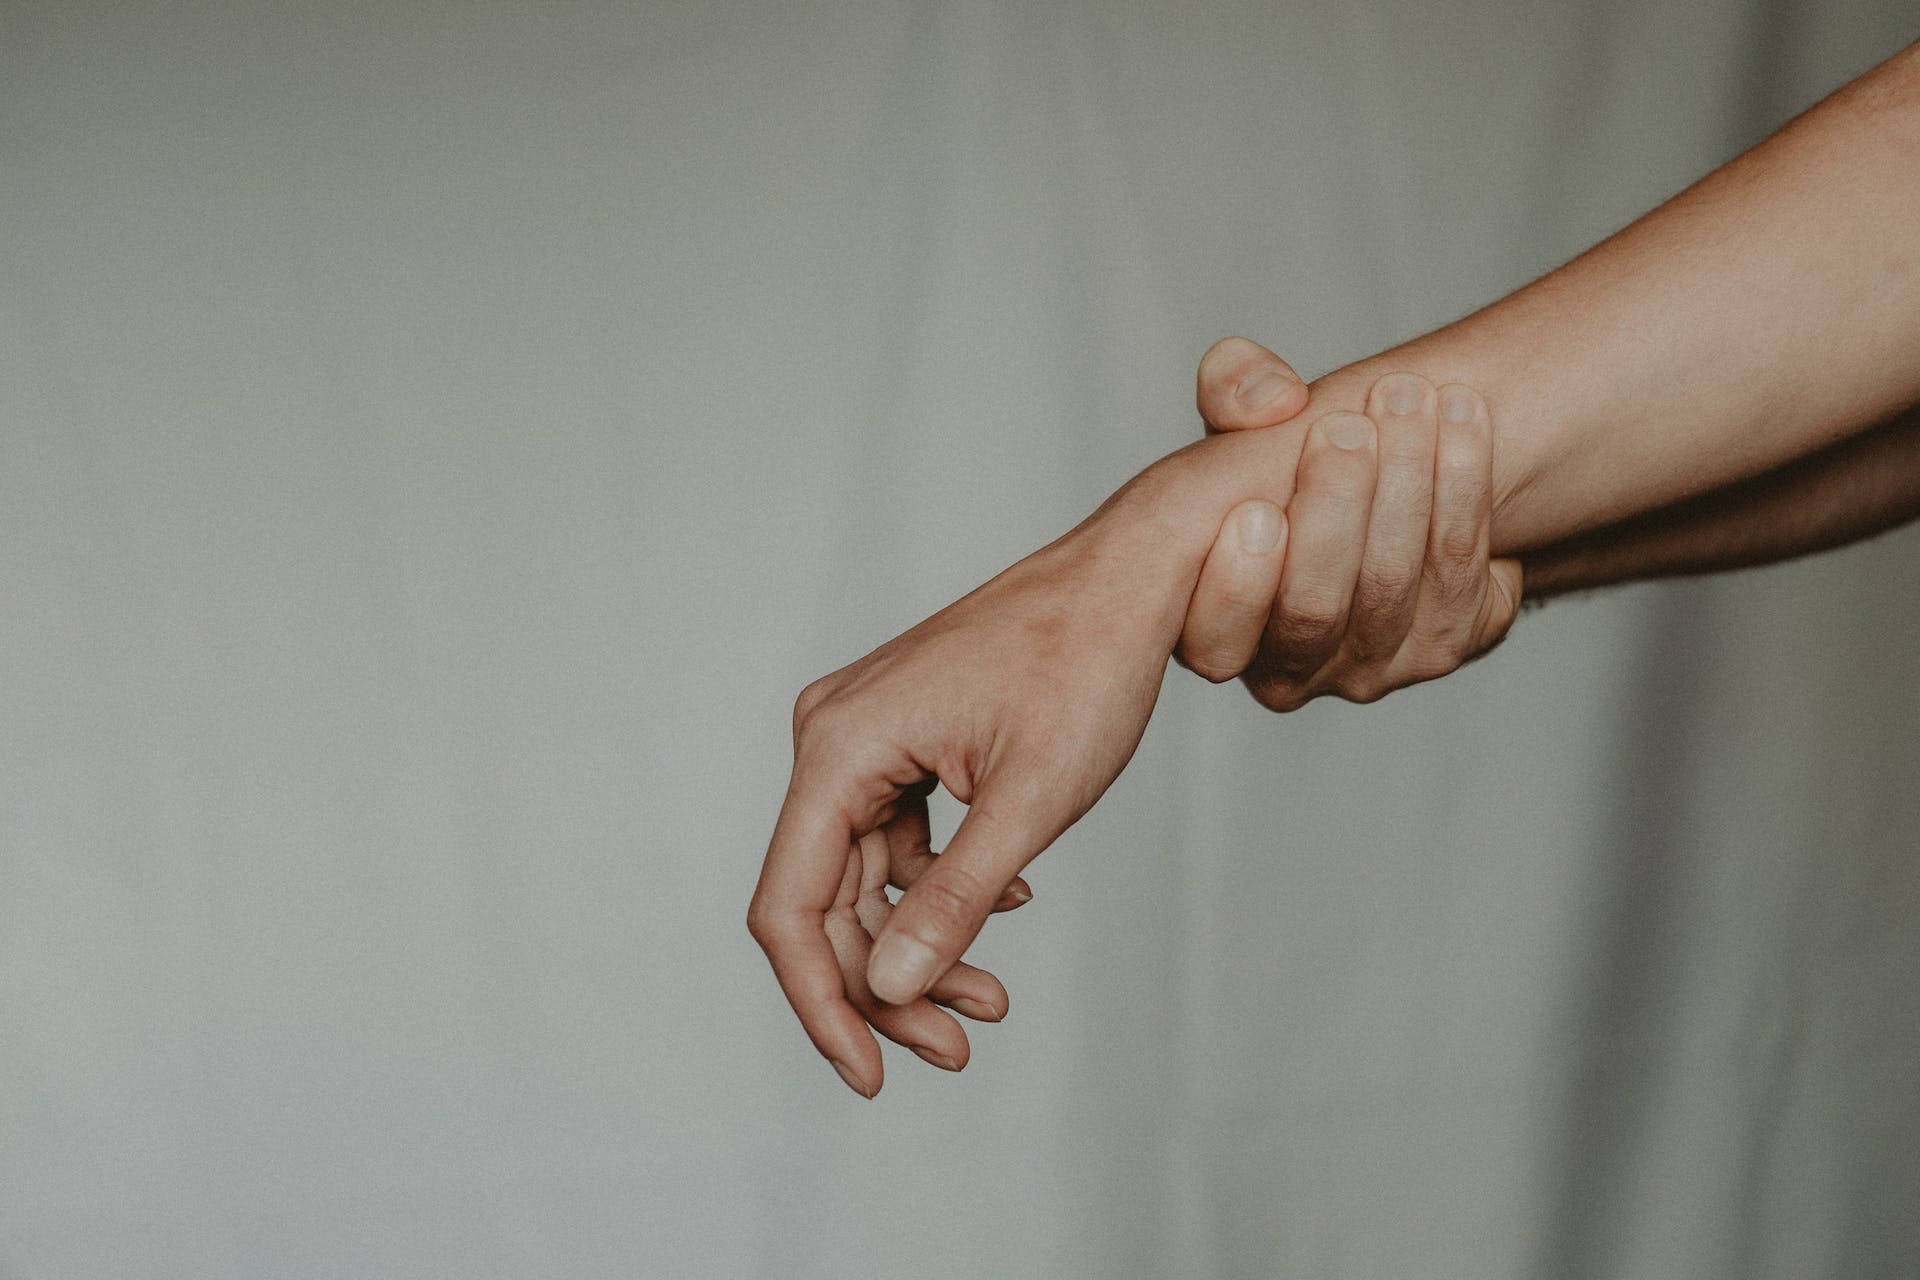 chronic pain sufferer holding wrist